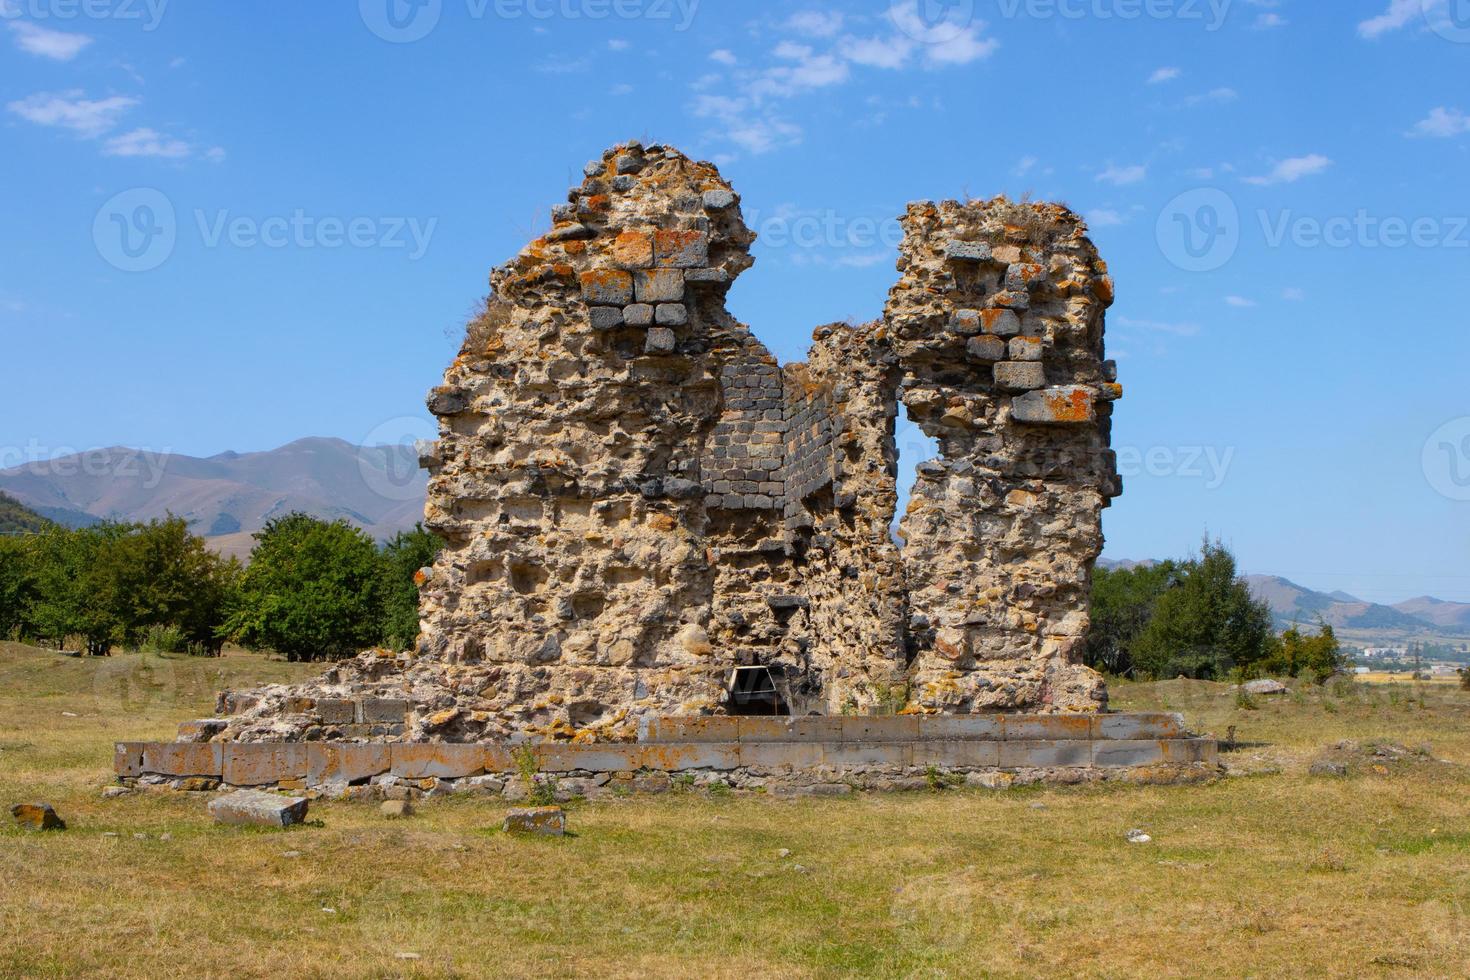 tormakavank monastero o tormak Chiesa nel Armenia, Lori regione foto